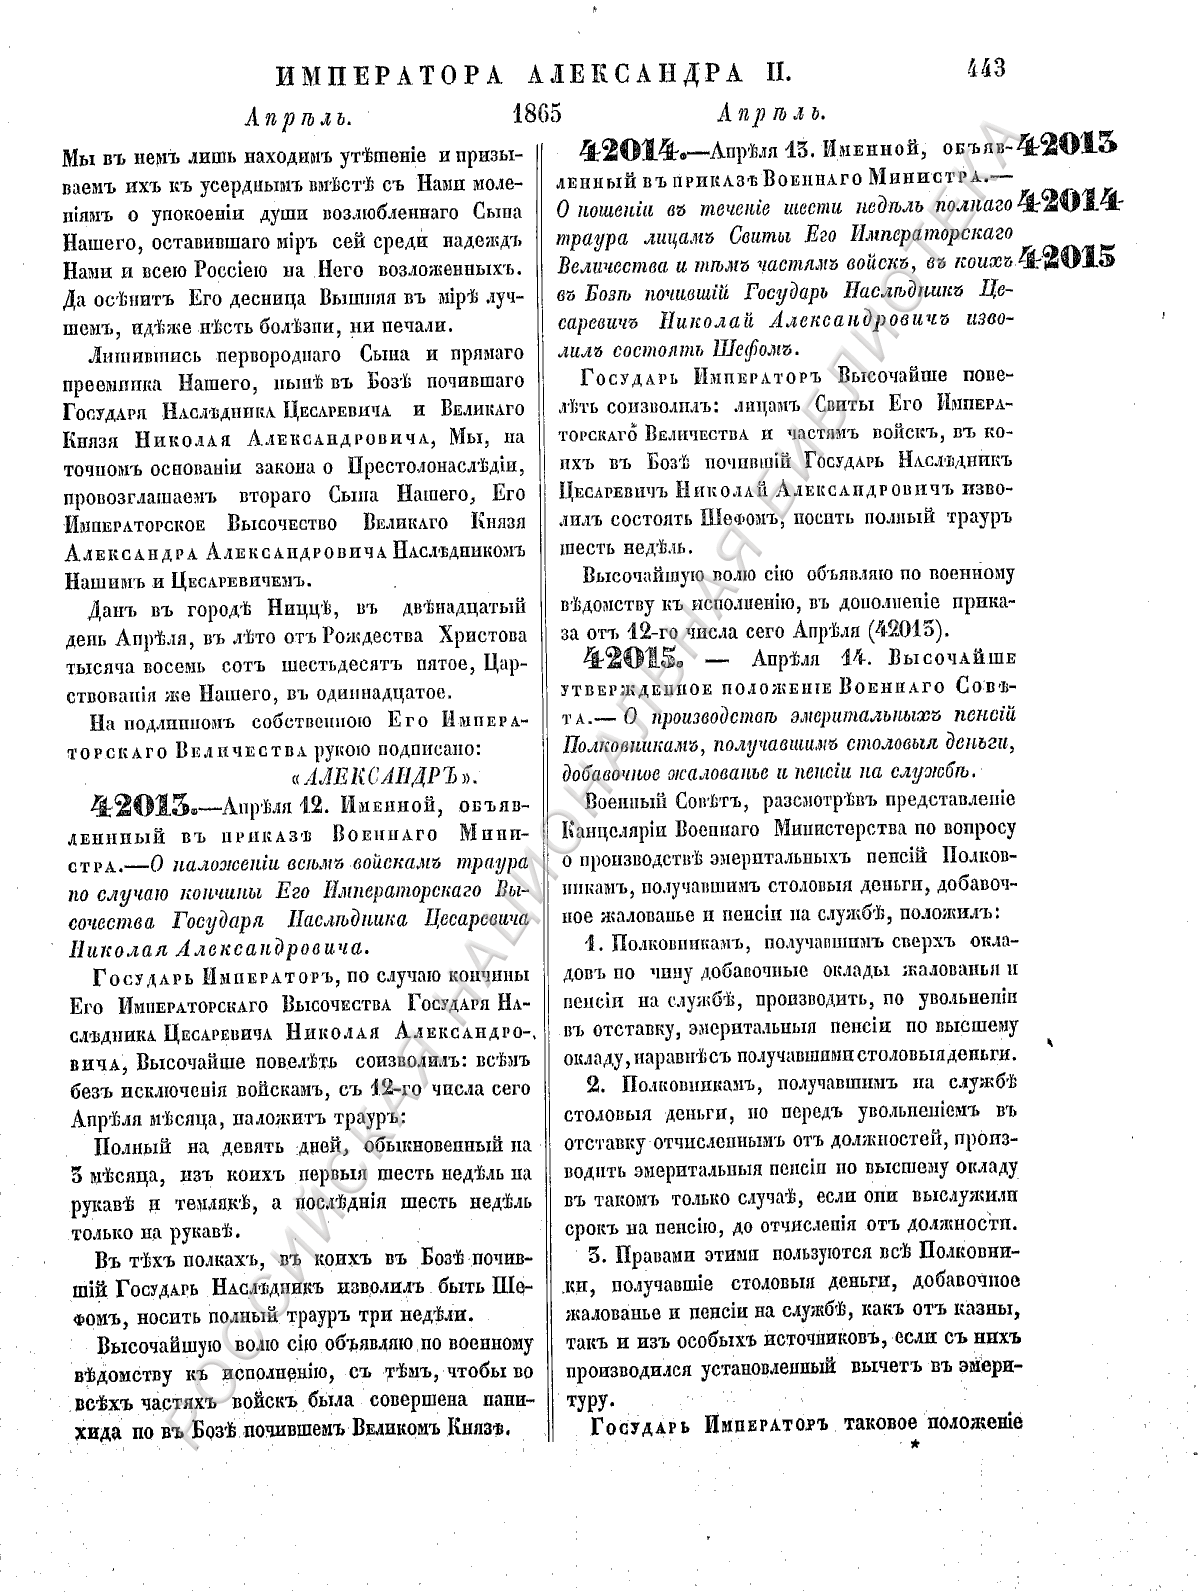 Объявление наследником престола 12 апреля 1865 Александра Александровича